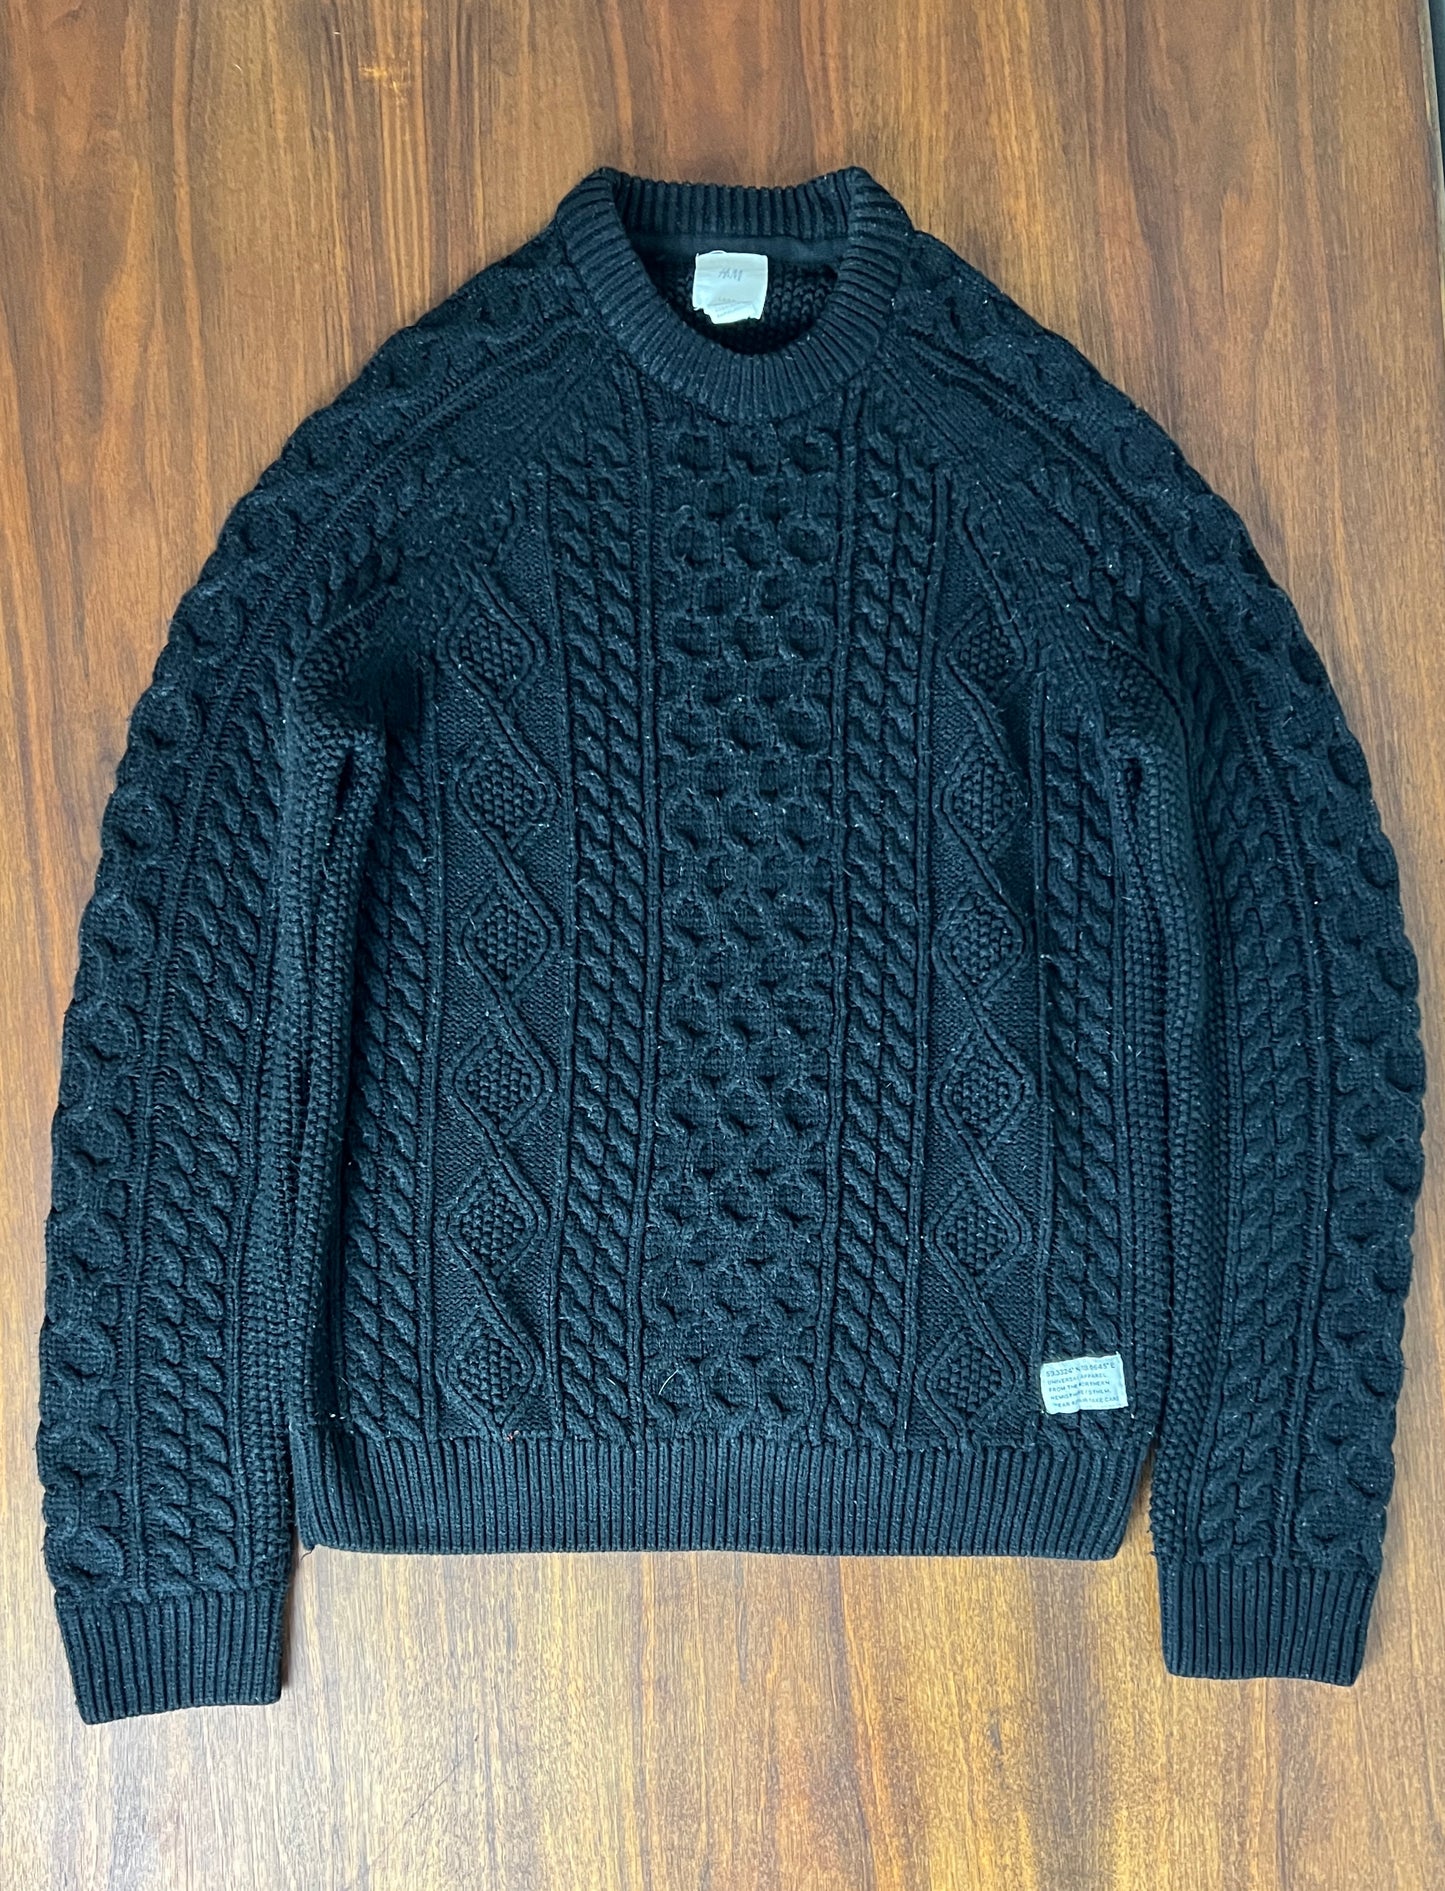 The Black Fisherman Sweater